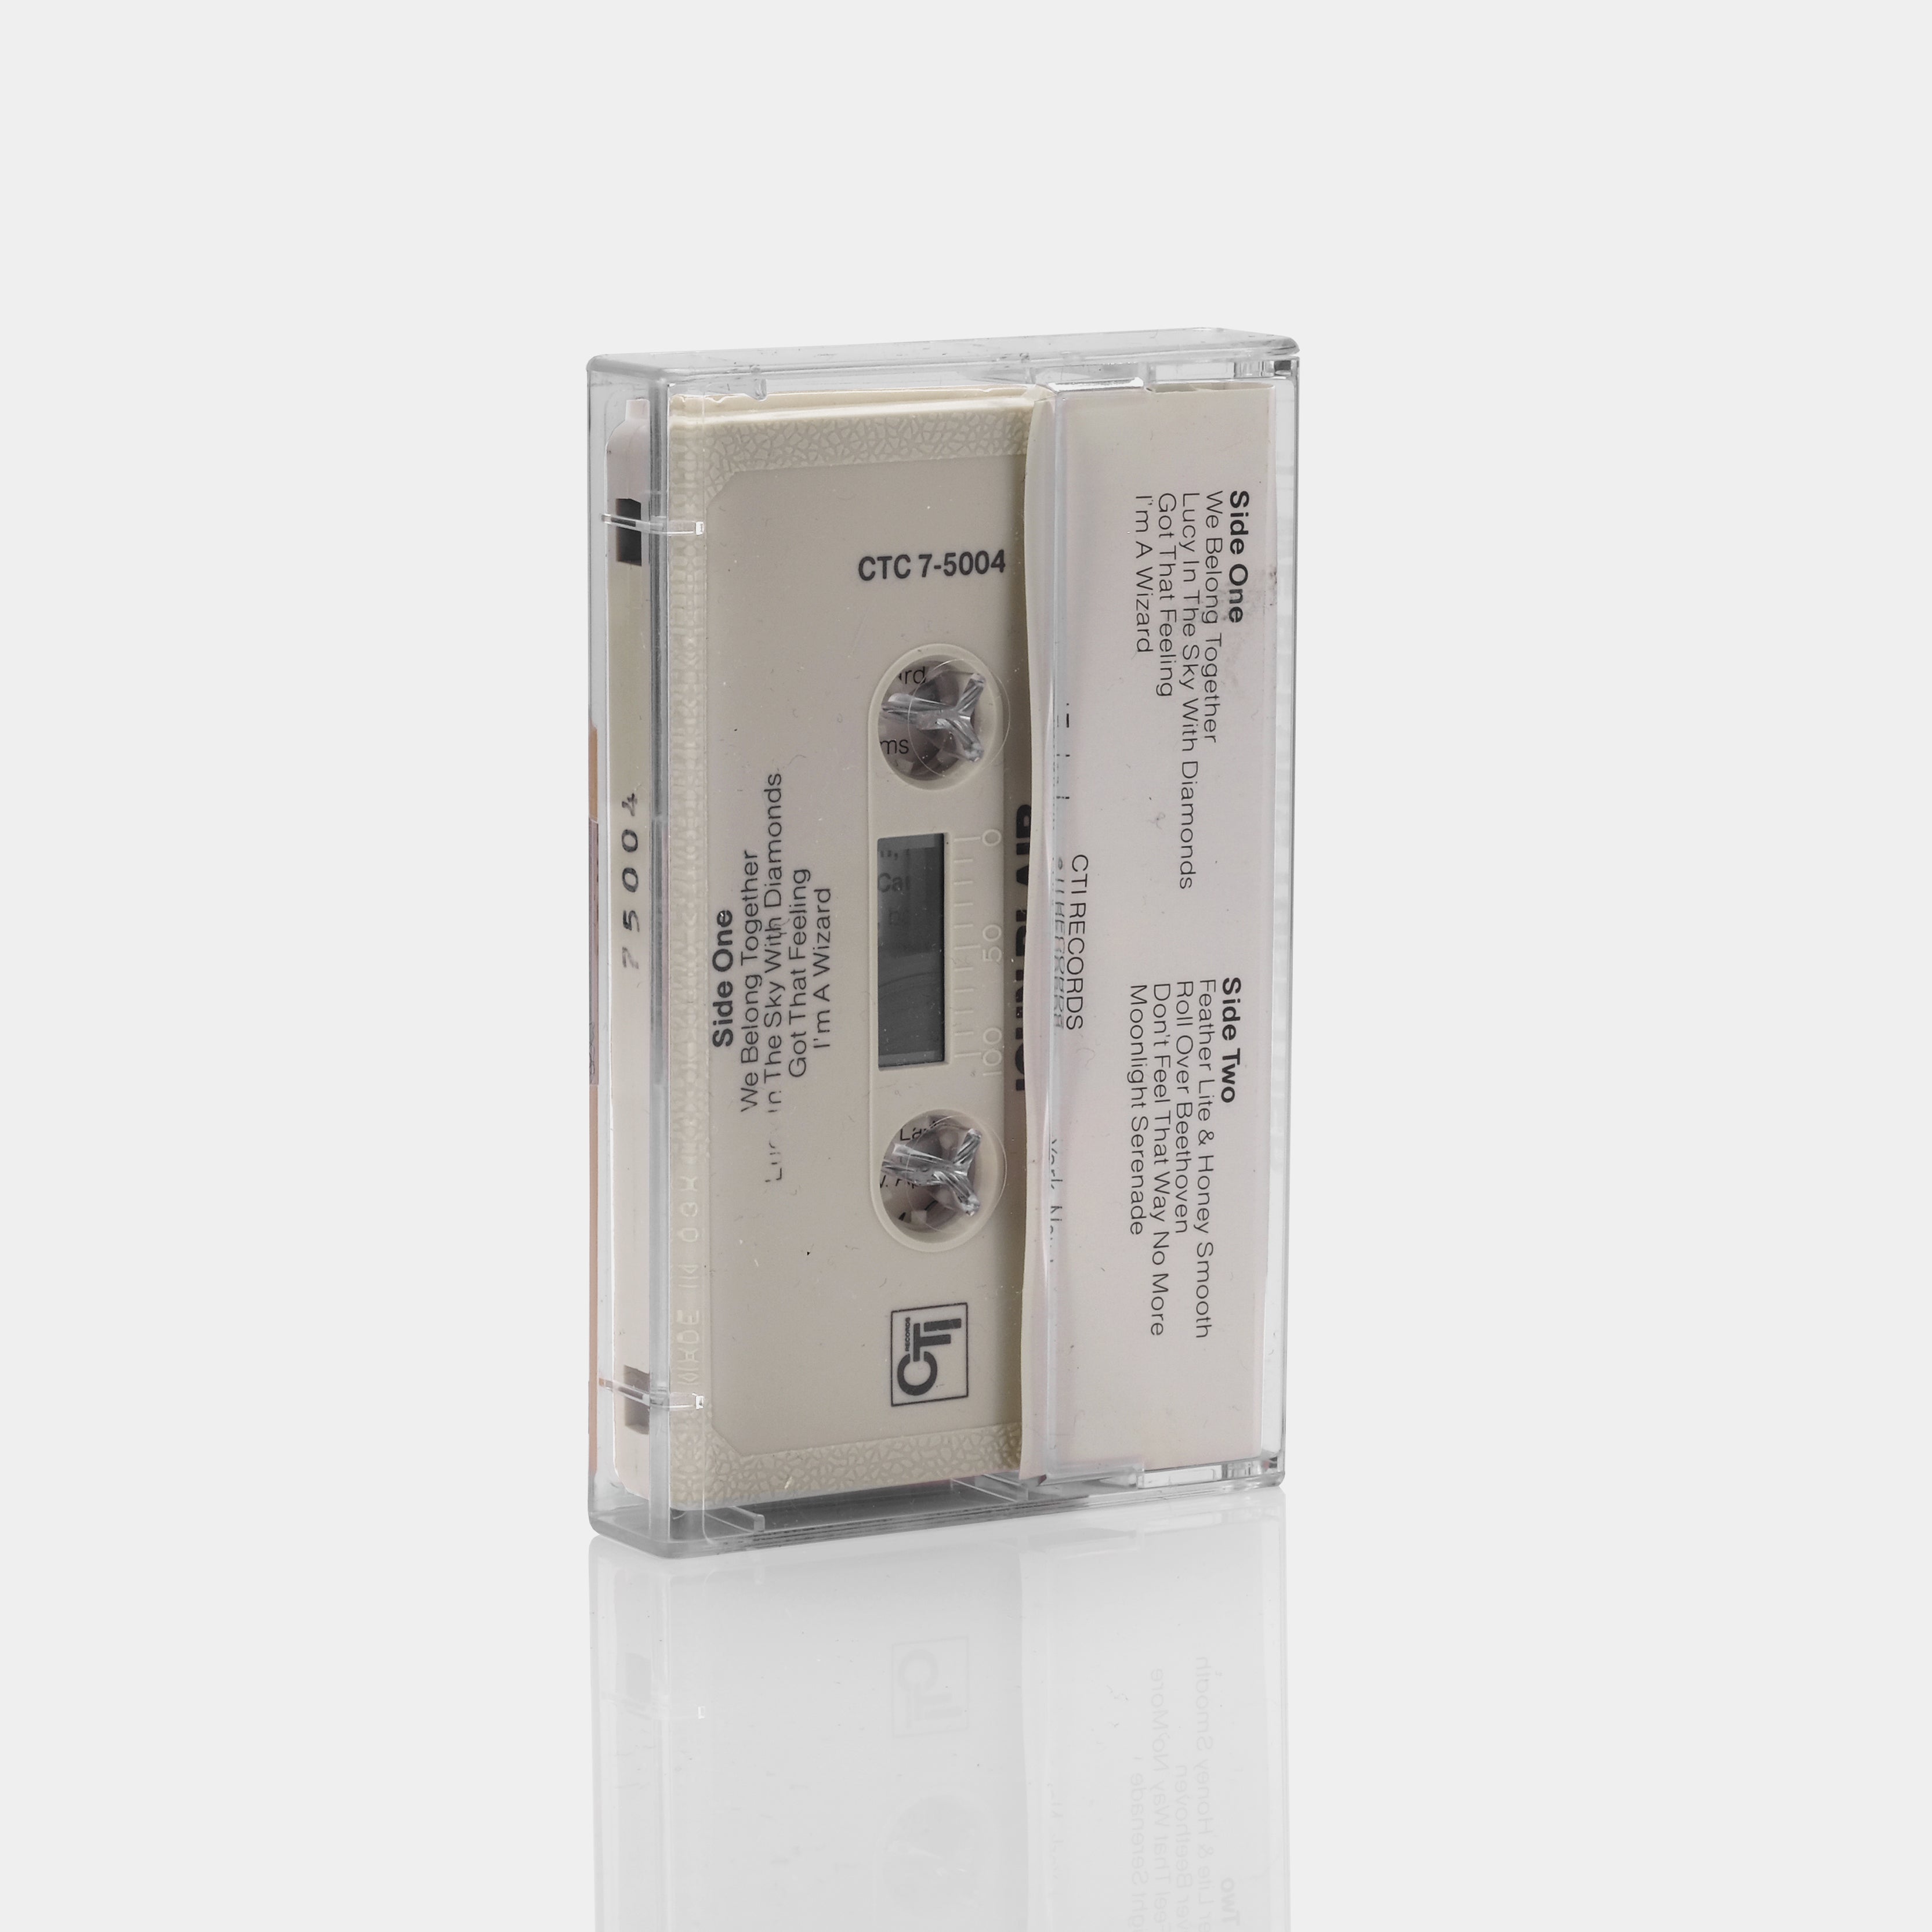 John Blair - We Belong Together Cassette Tape